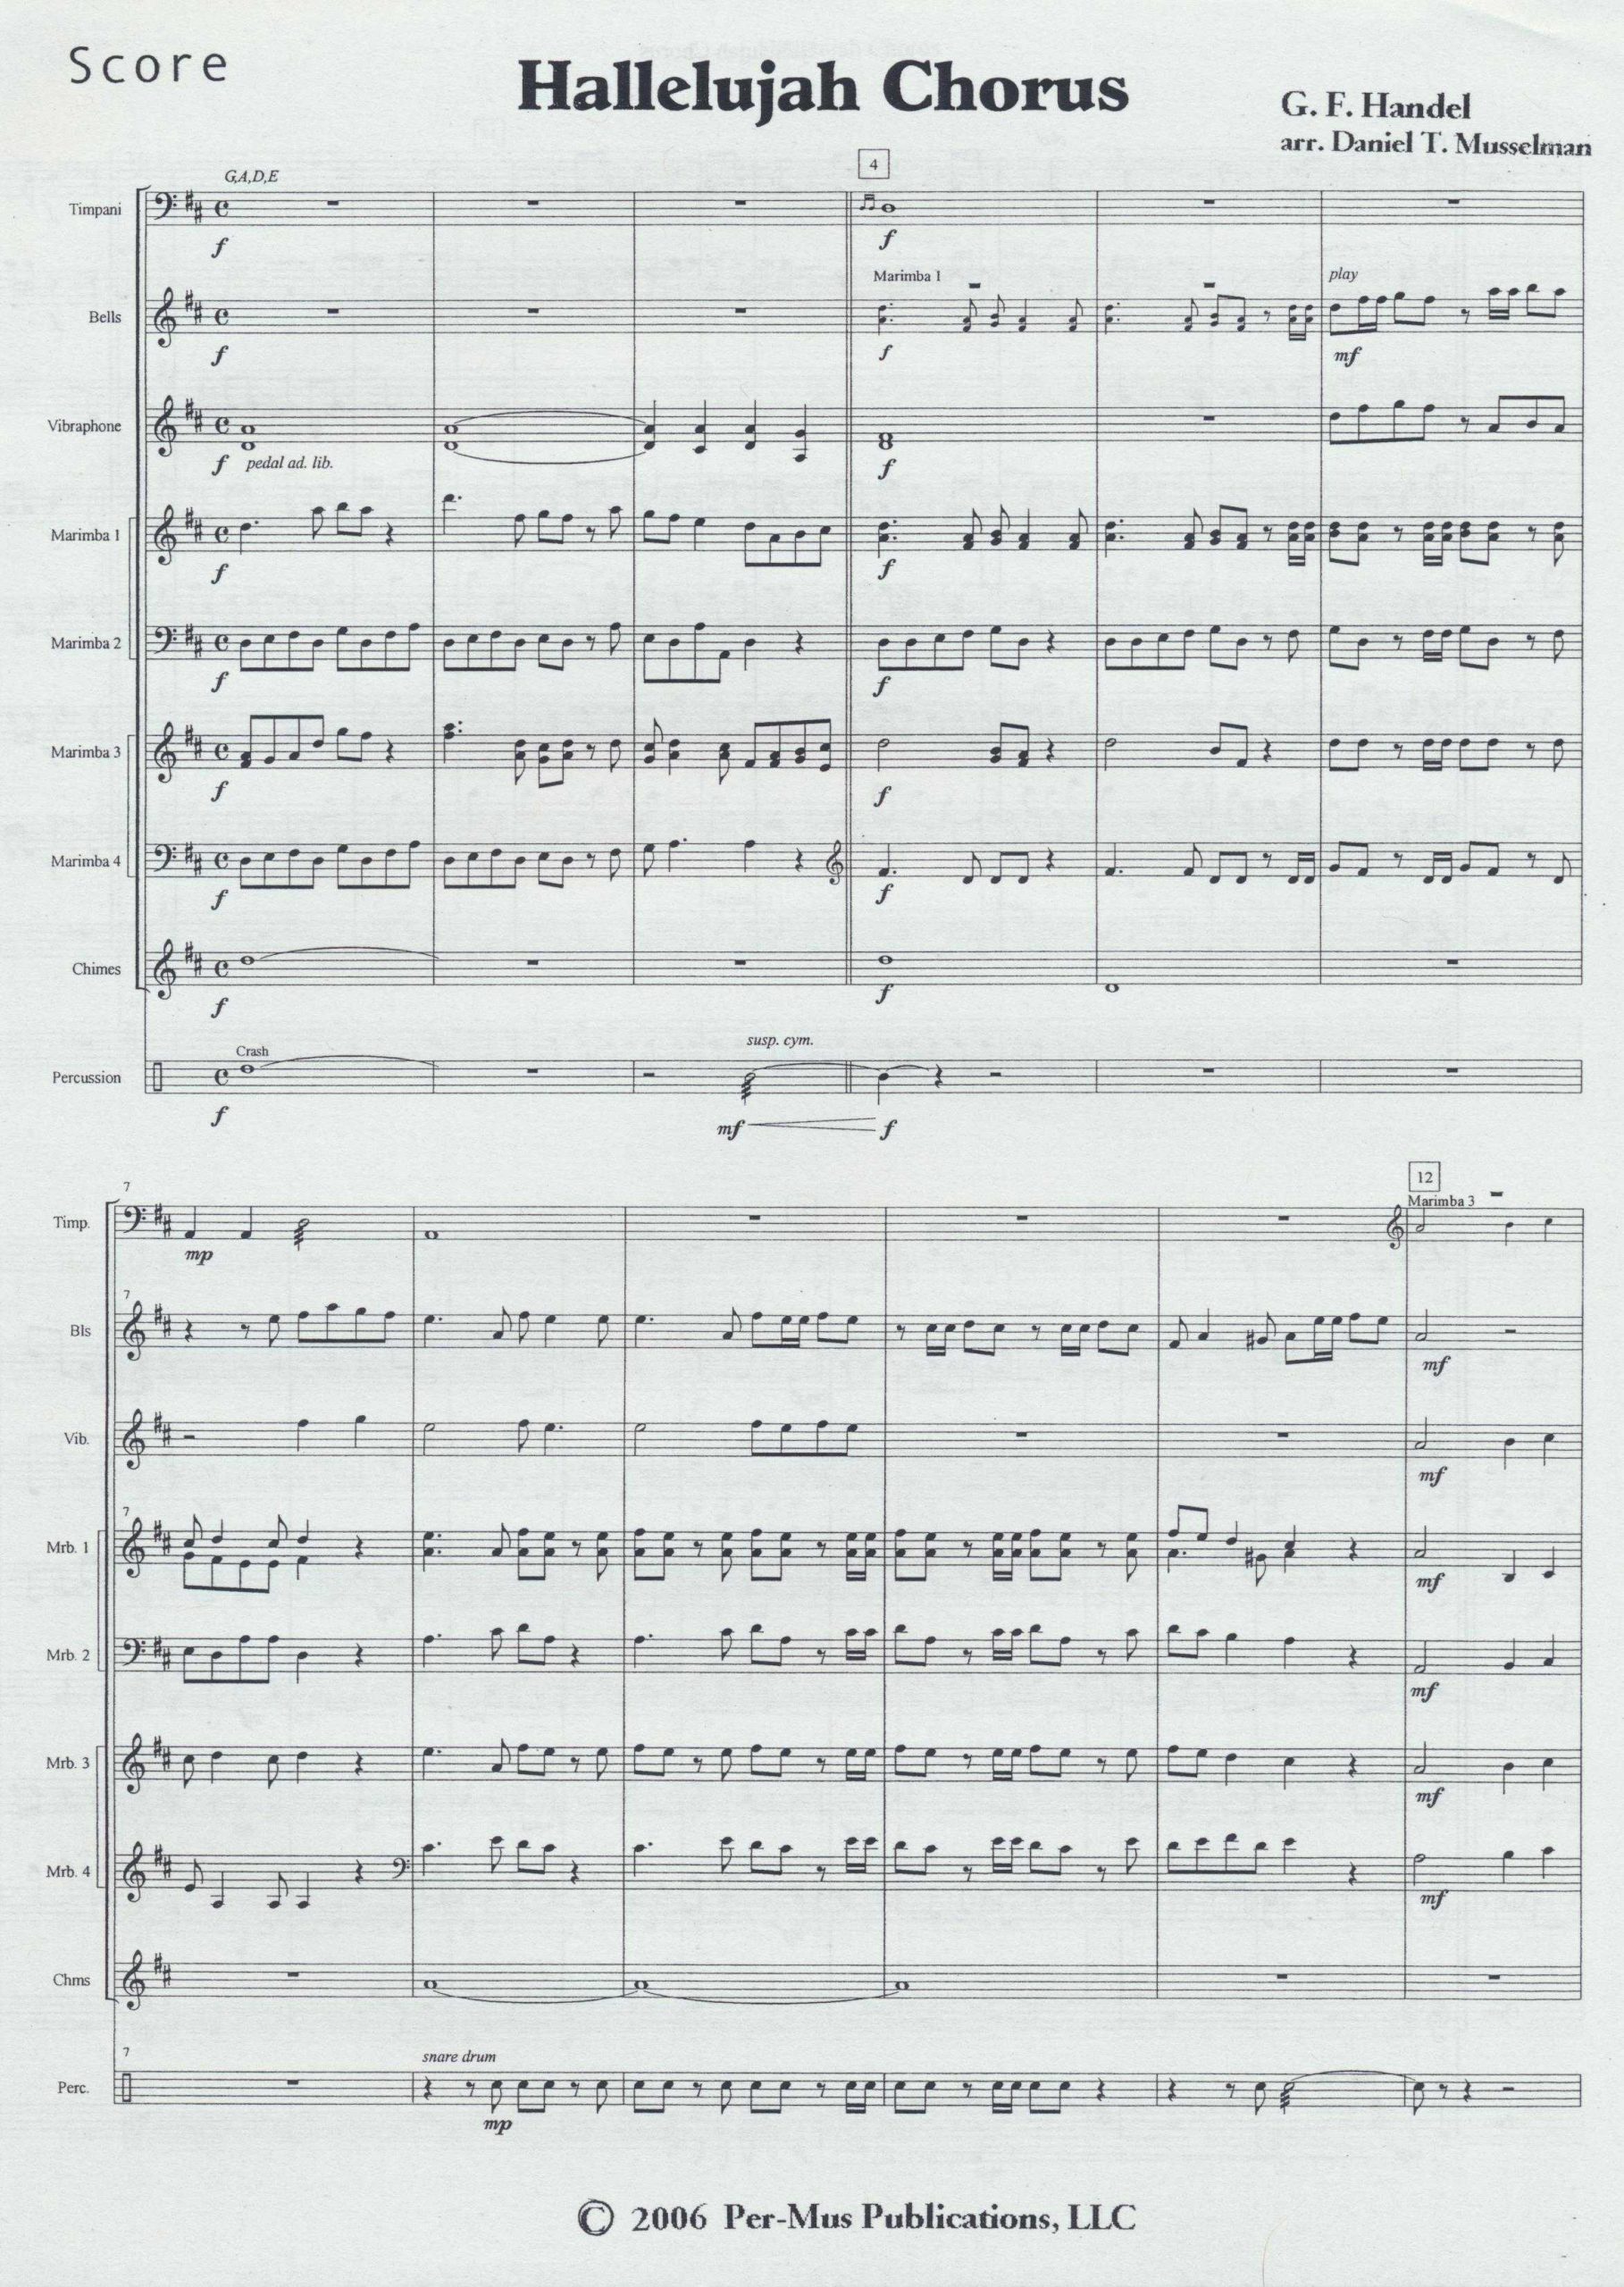 Hallelujah Chorus by Handel arr. Daniel Musselman